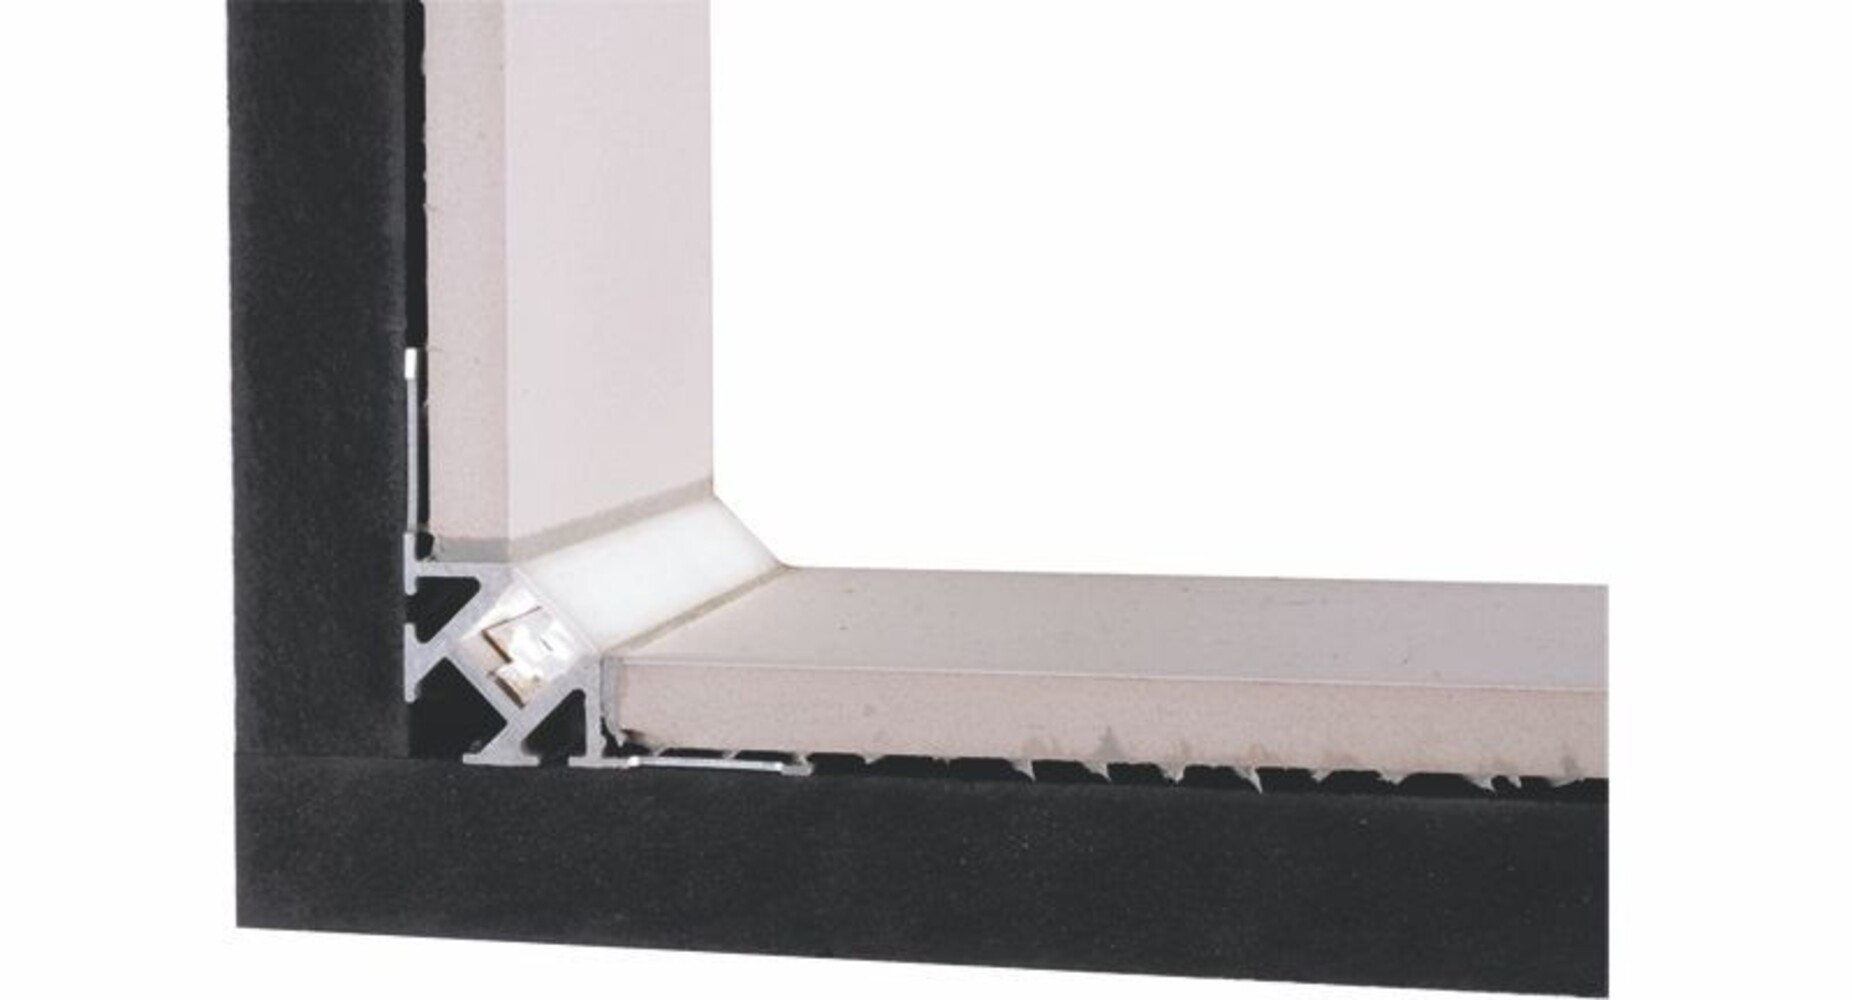 Exquisites silber mattes LED-Profil von Deko-Light für 8-9.3 mm LED-Stripes